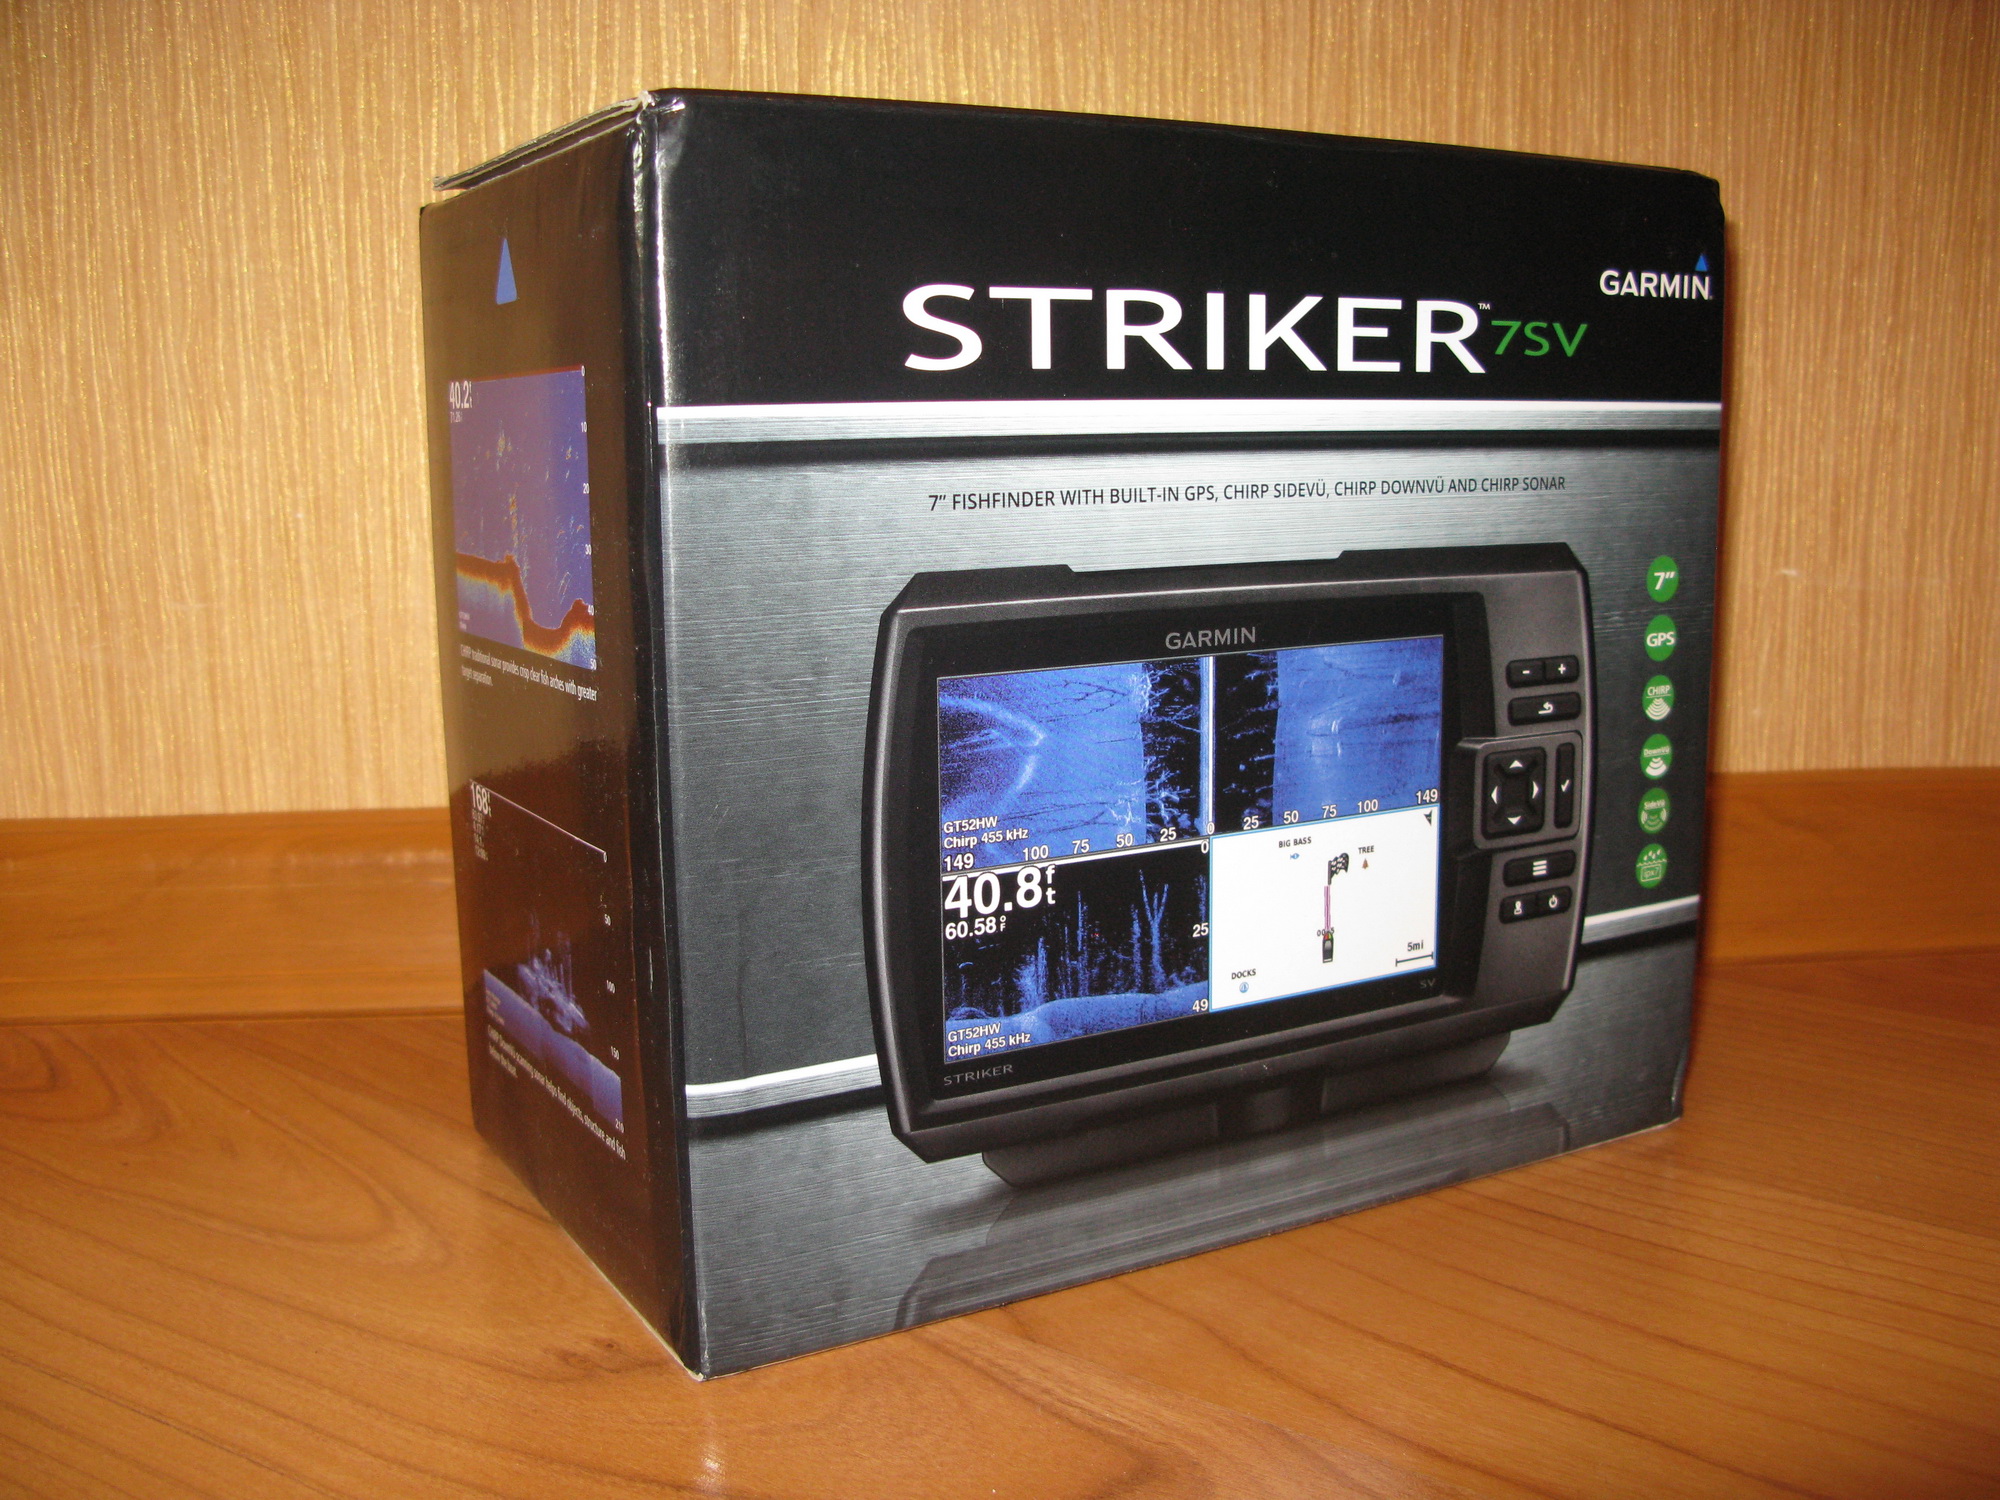 Страйкер 7sv. Гармин Страйкер 7св. Garmin Striker Plus SV 7 коробка. Гармин Страйкер вивид 7sv коробка. Гармин Страйкер 7sv размер упаковки.